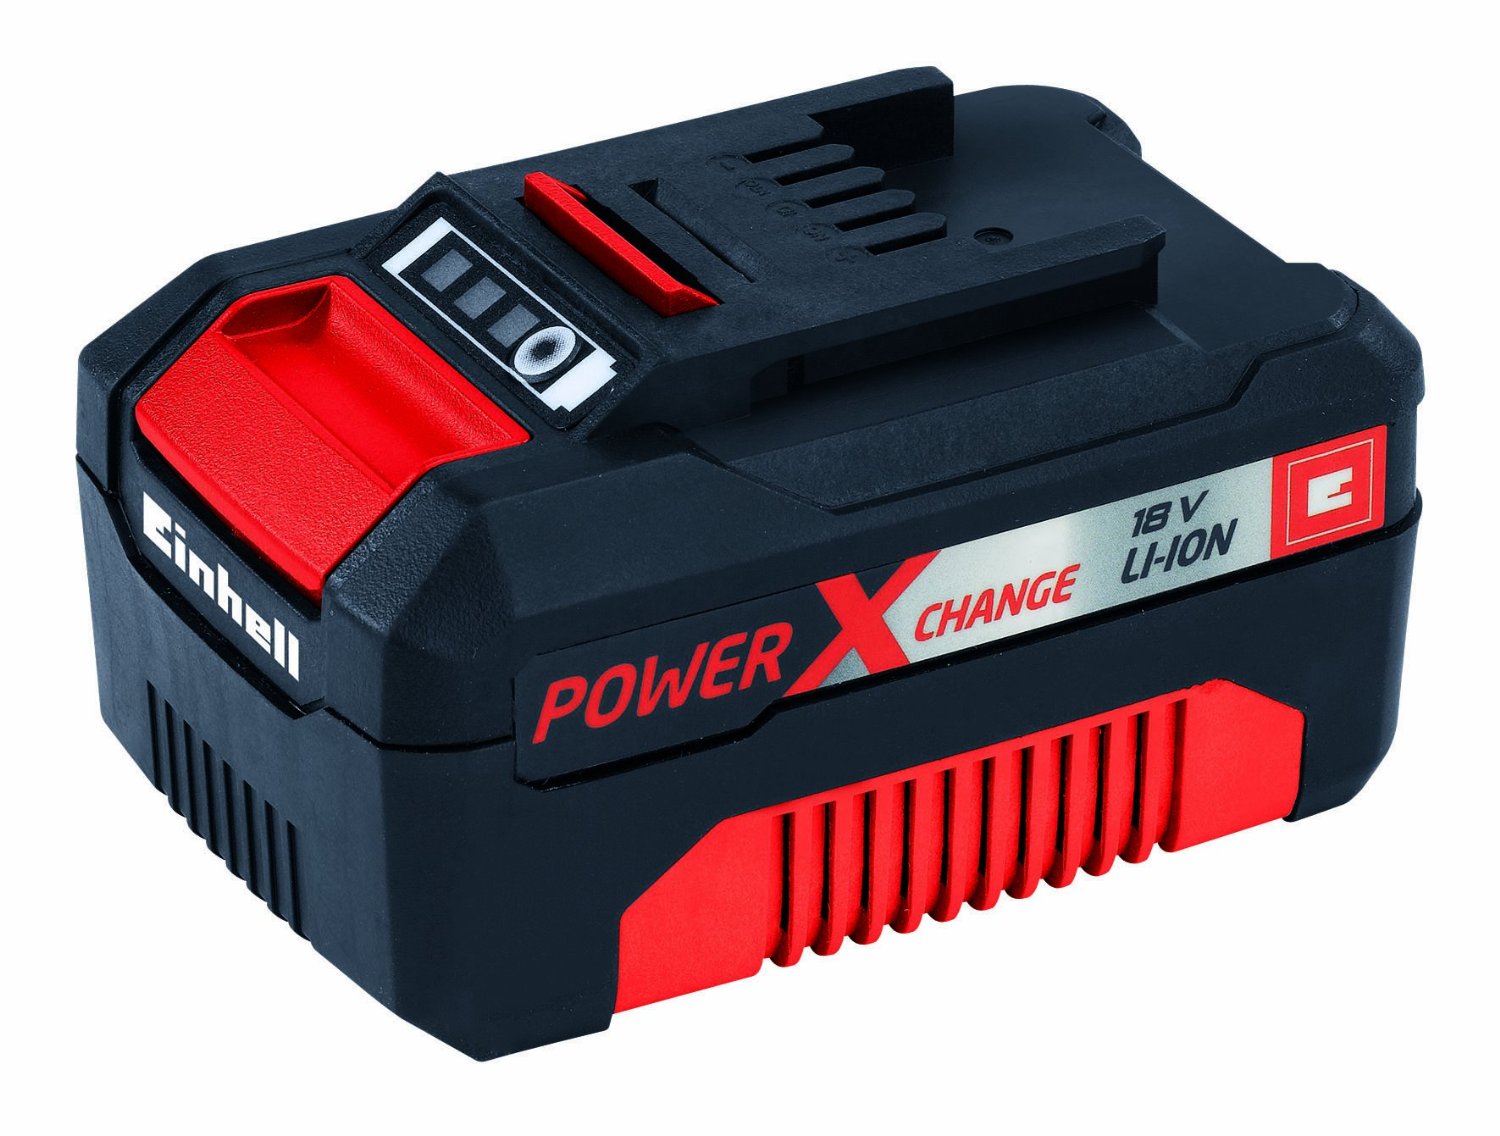 Einhell Power X Change 15Ah 18V Battery